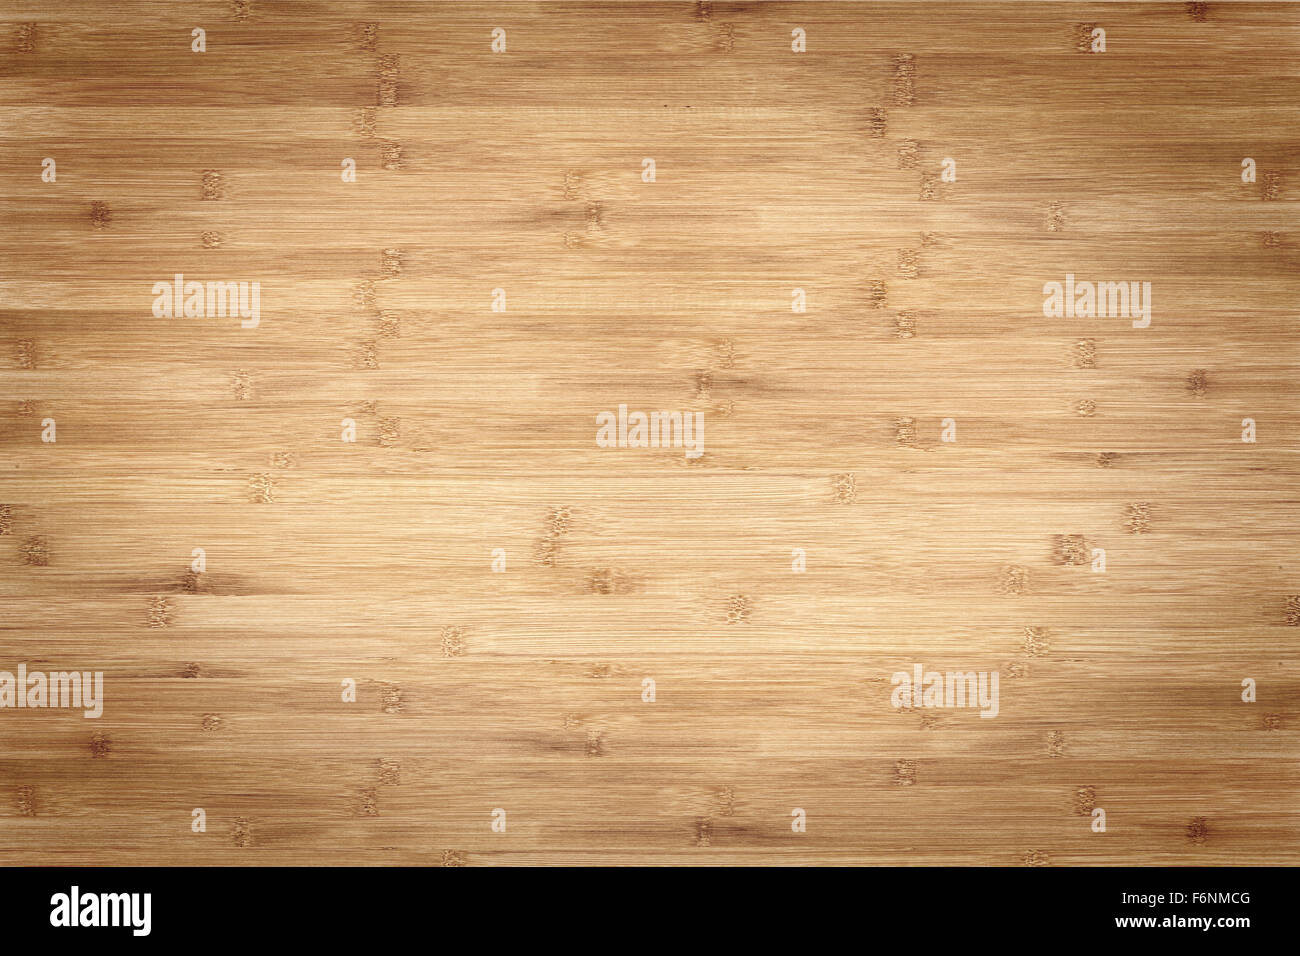 bamboo background wood texture Stock Photo